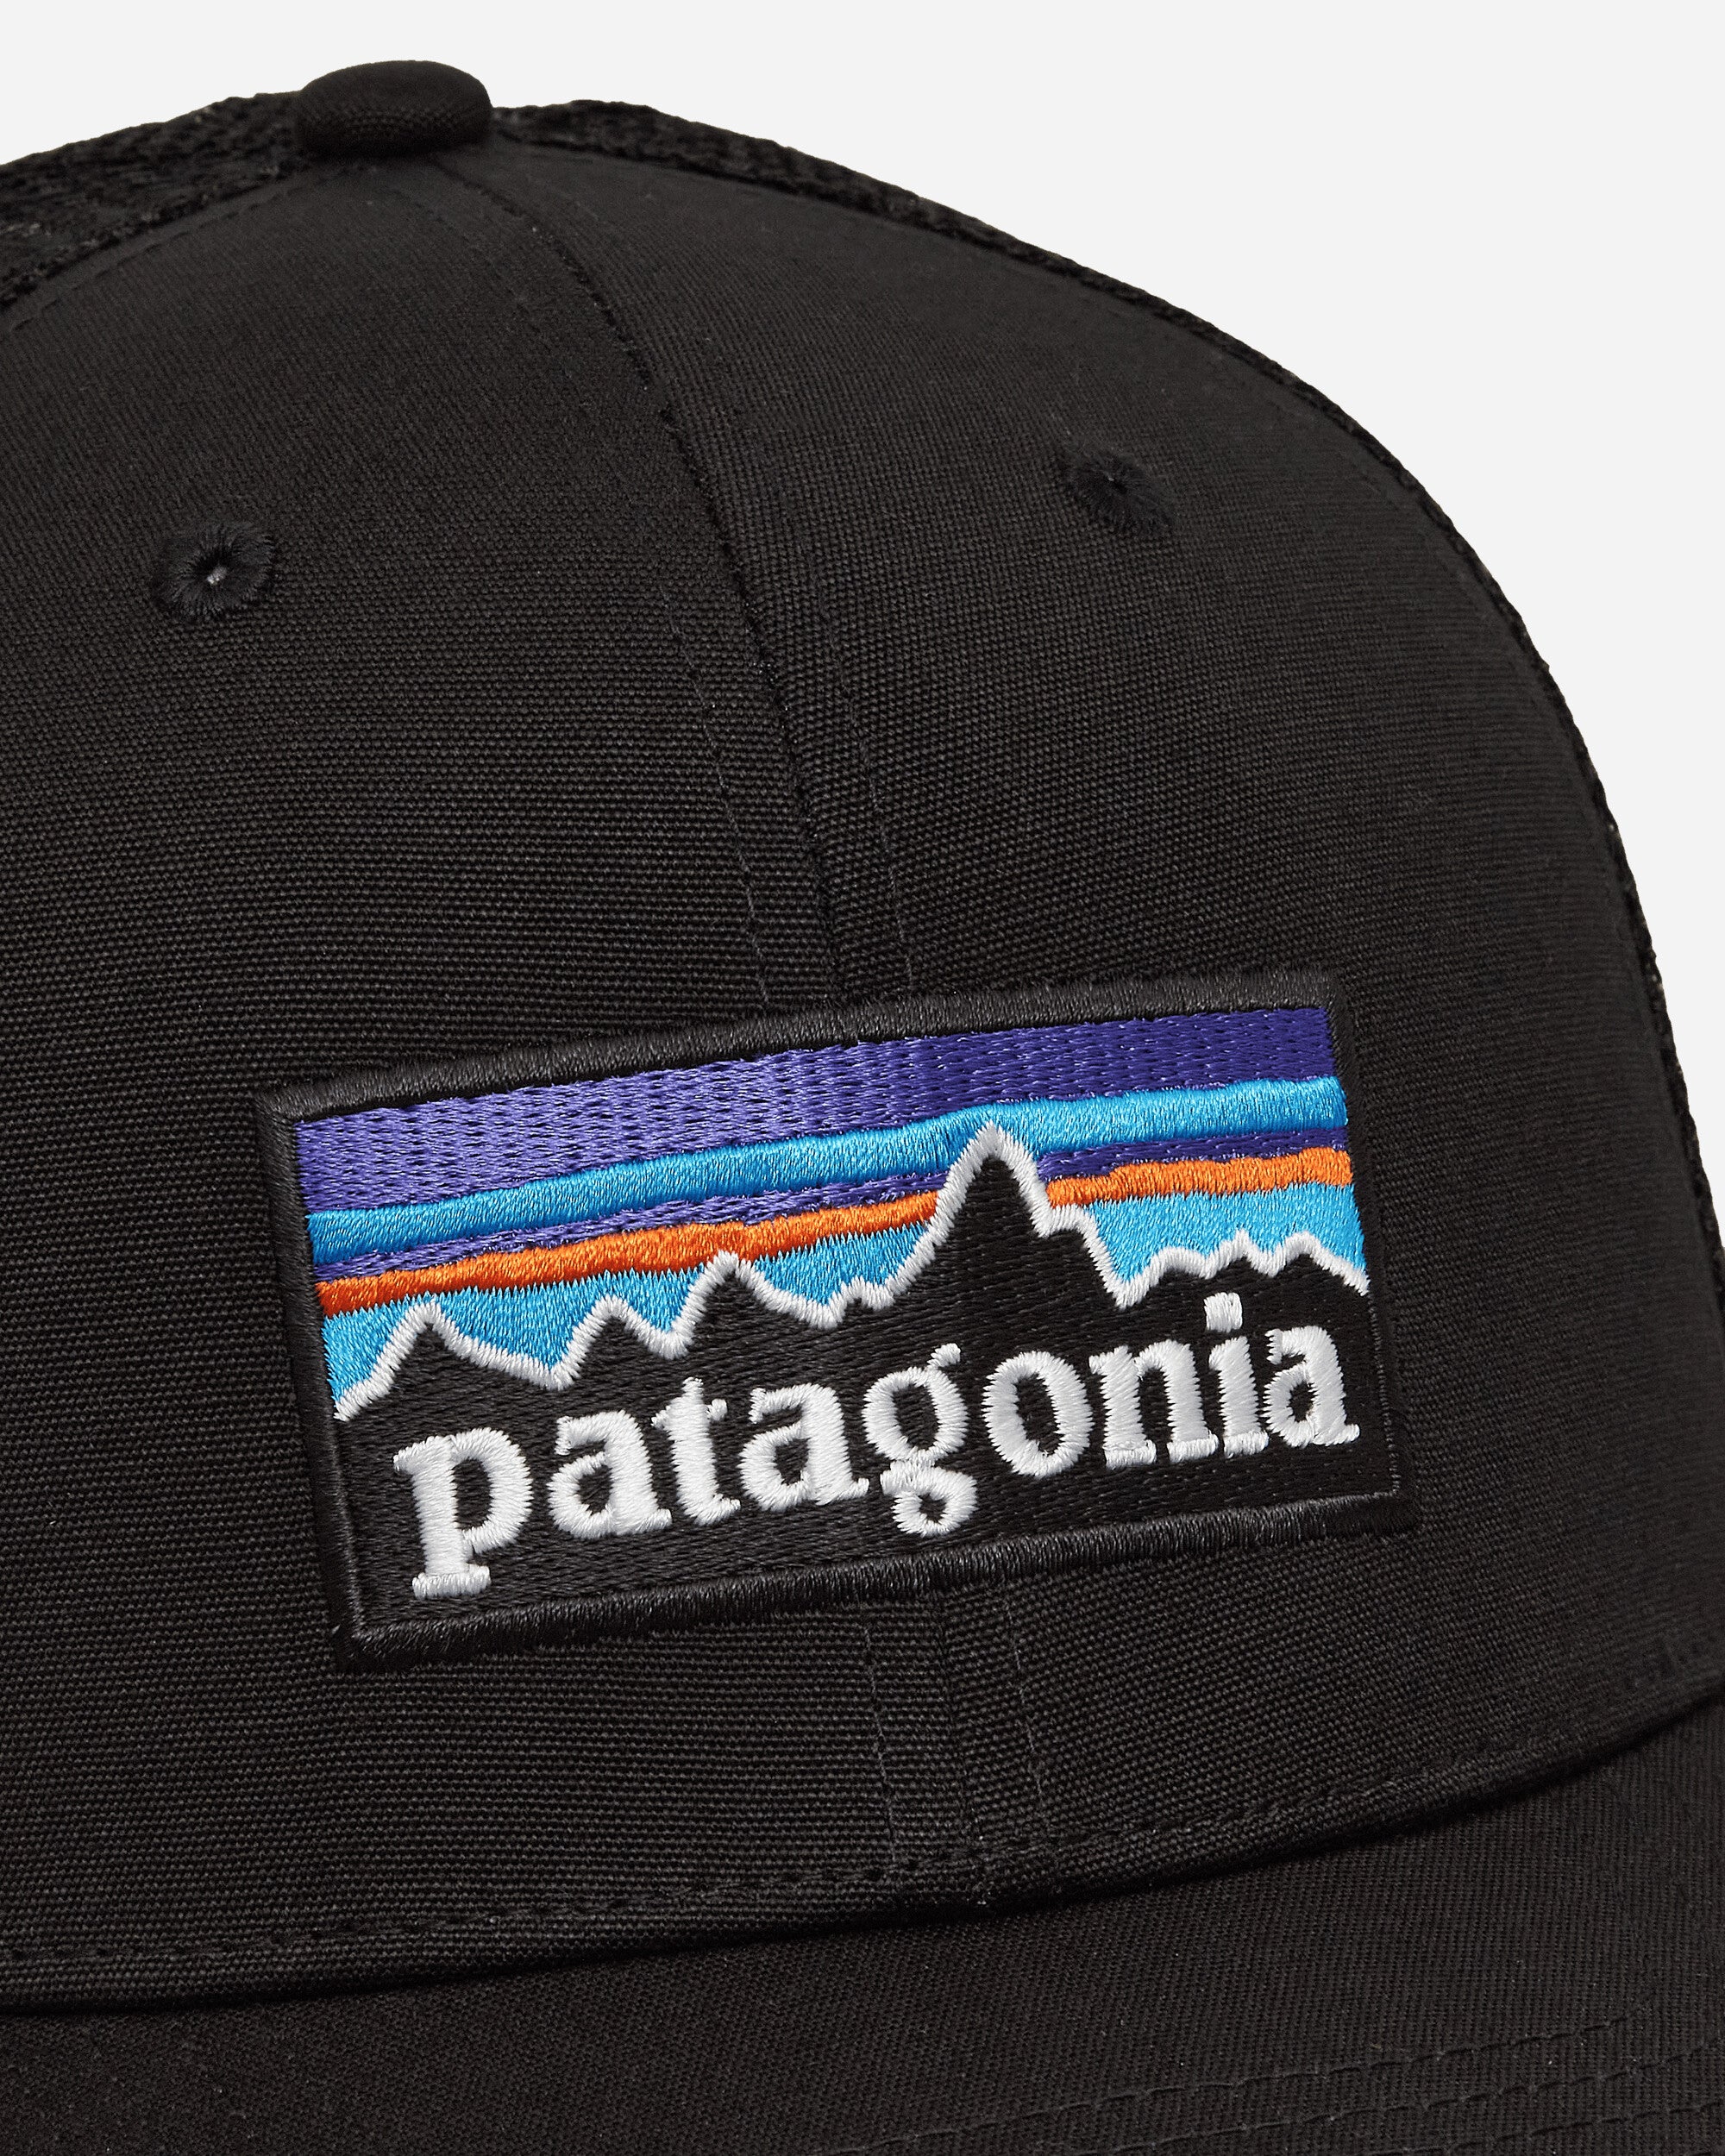 Patagonia P-6 Logo Trucker Hat Black Hats Caps 38289 BLK